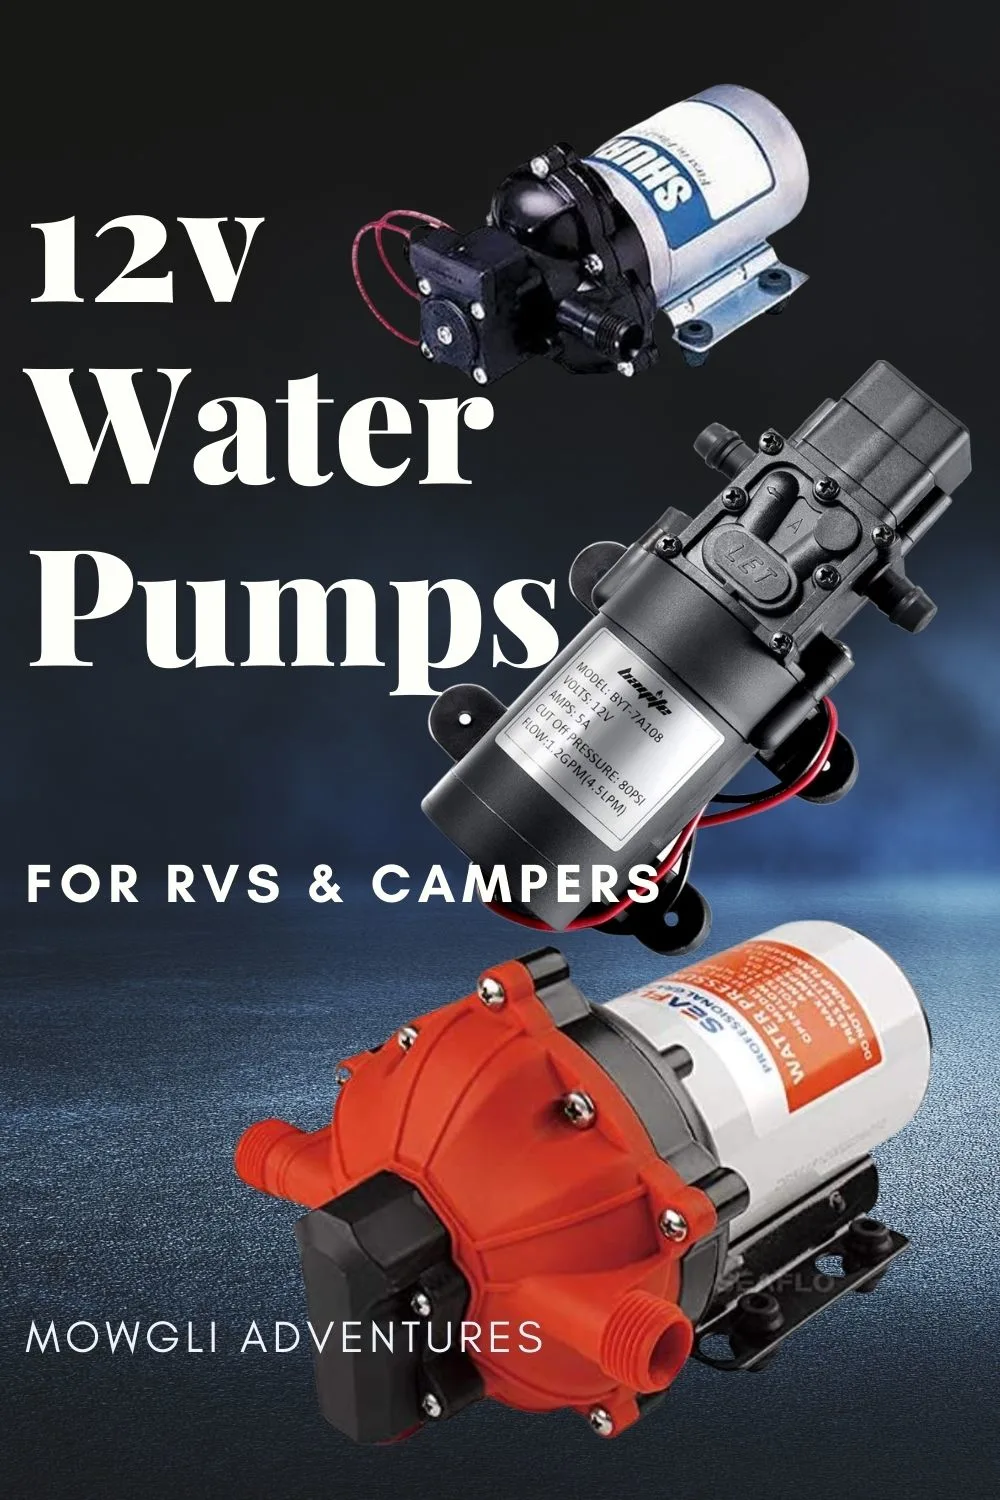 12v RV water pumps for campervan conversion, van builds and campers on Pinterest